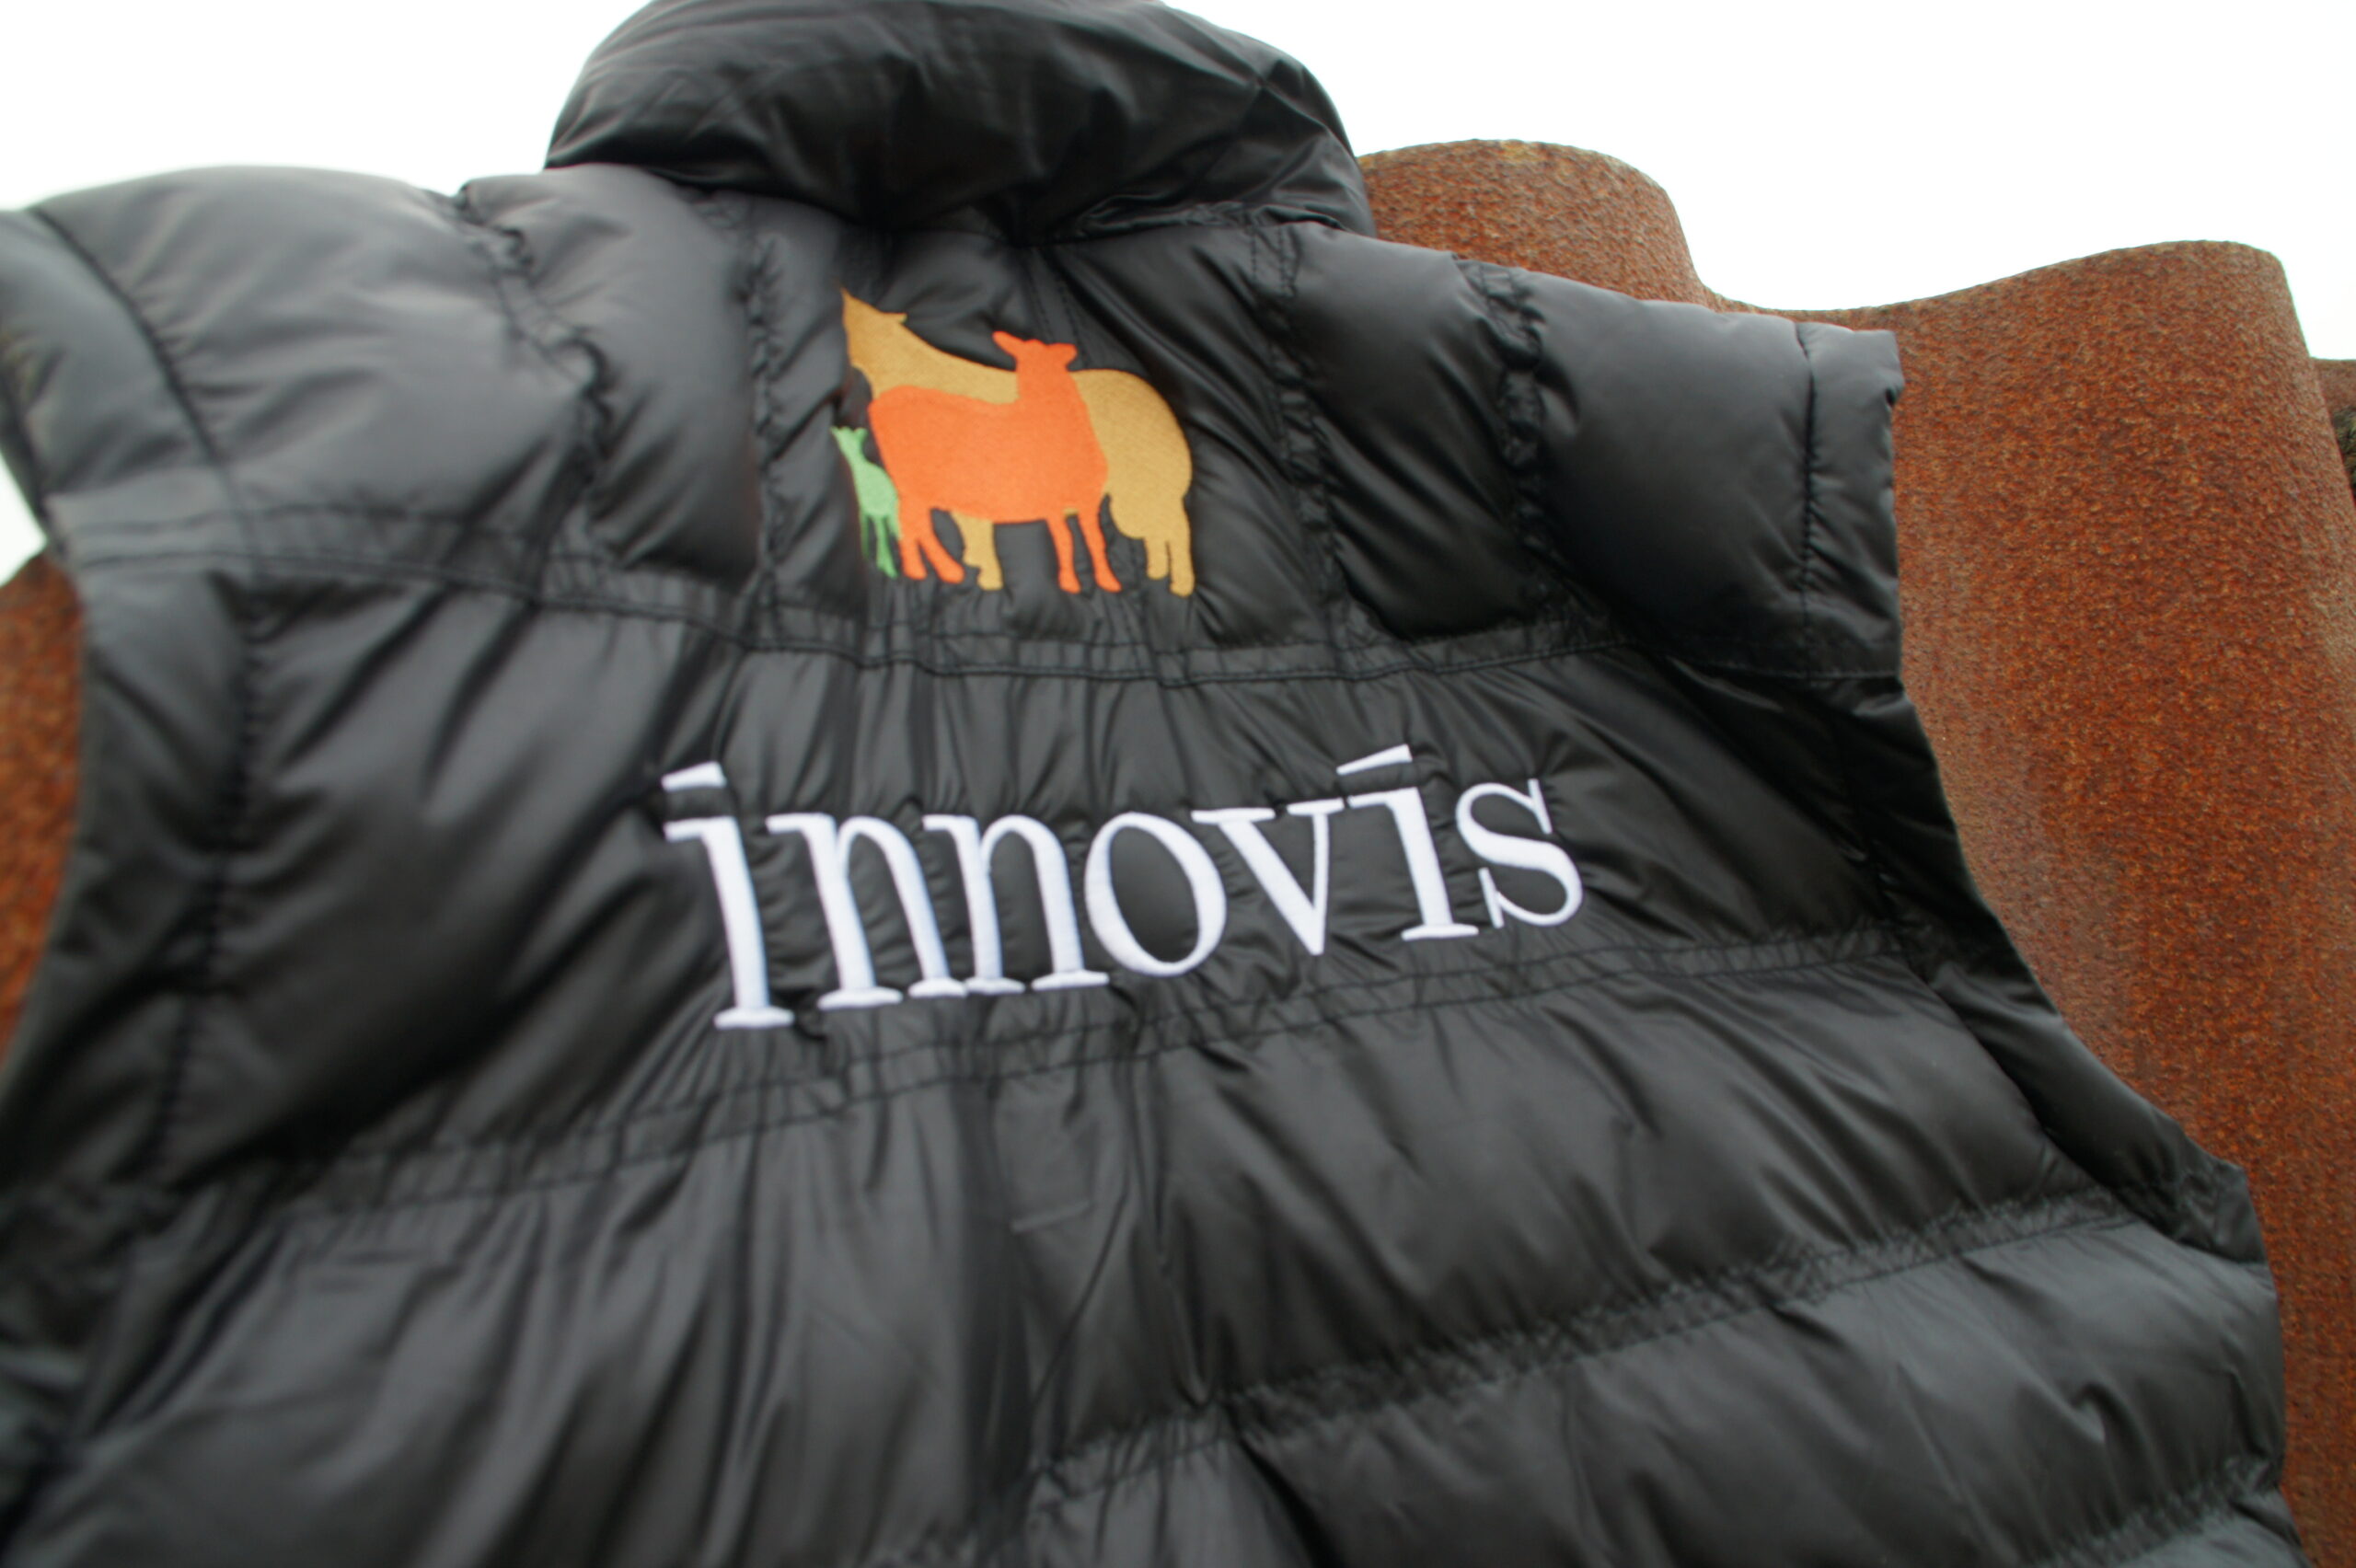 Closup of Innovis livestock farming logo on a padded bodywarmer